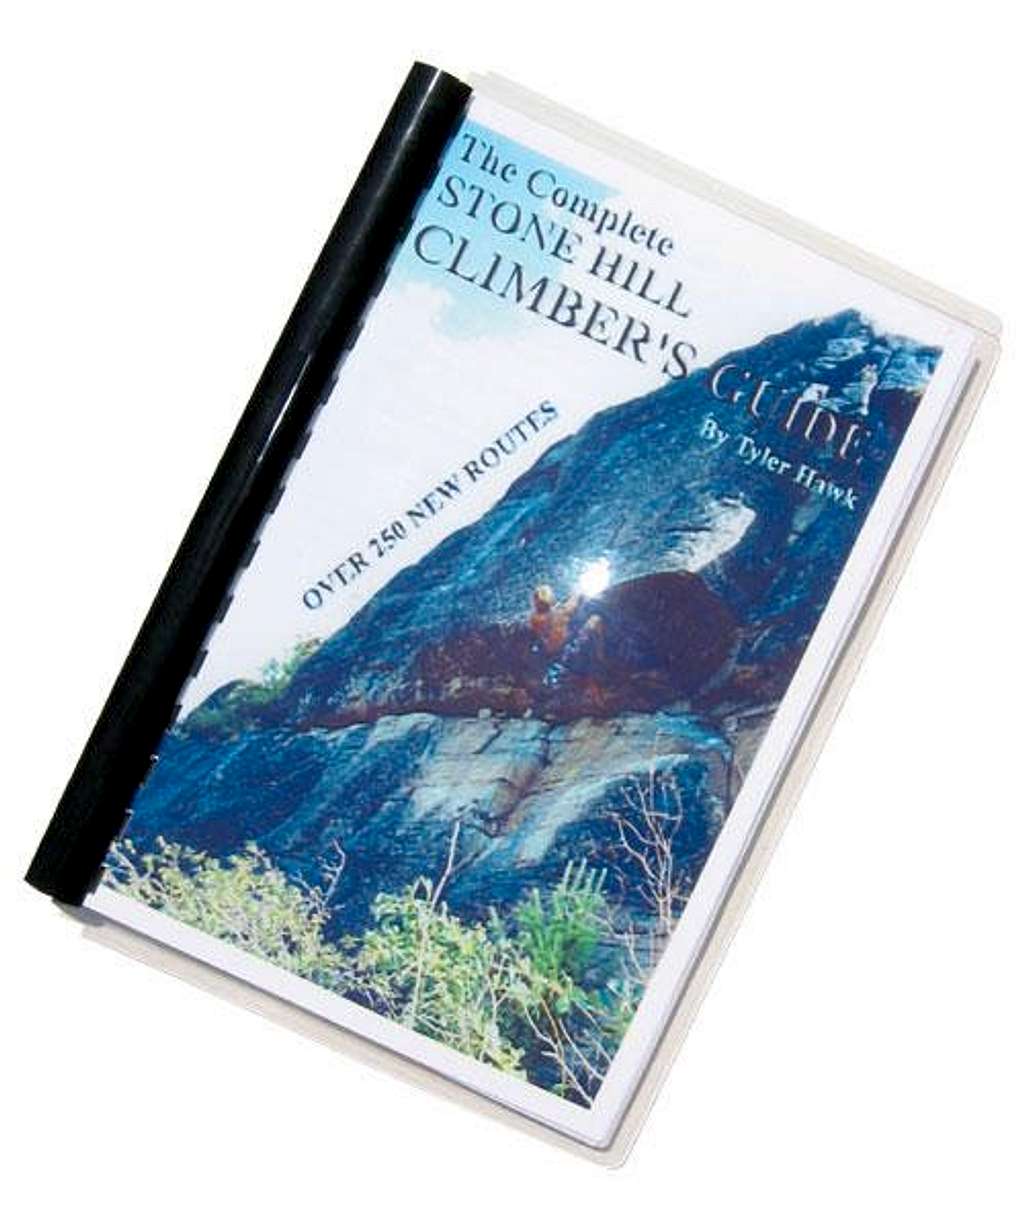 Stonehill Climber's Guide